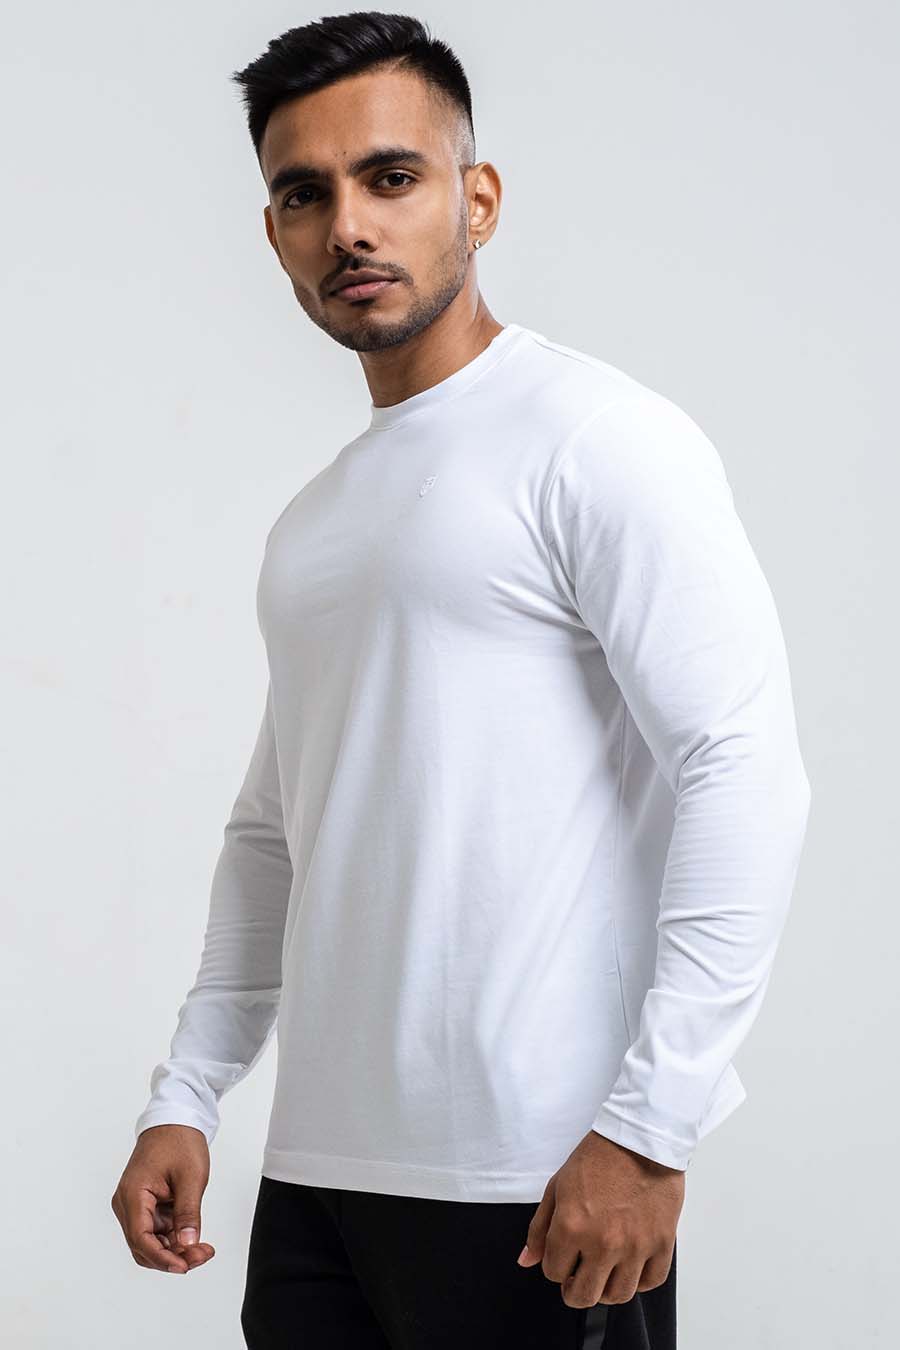 Longs steeve Plain staple color, solid lycra jersey T-shirt